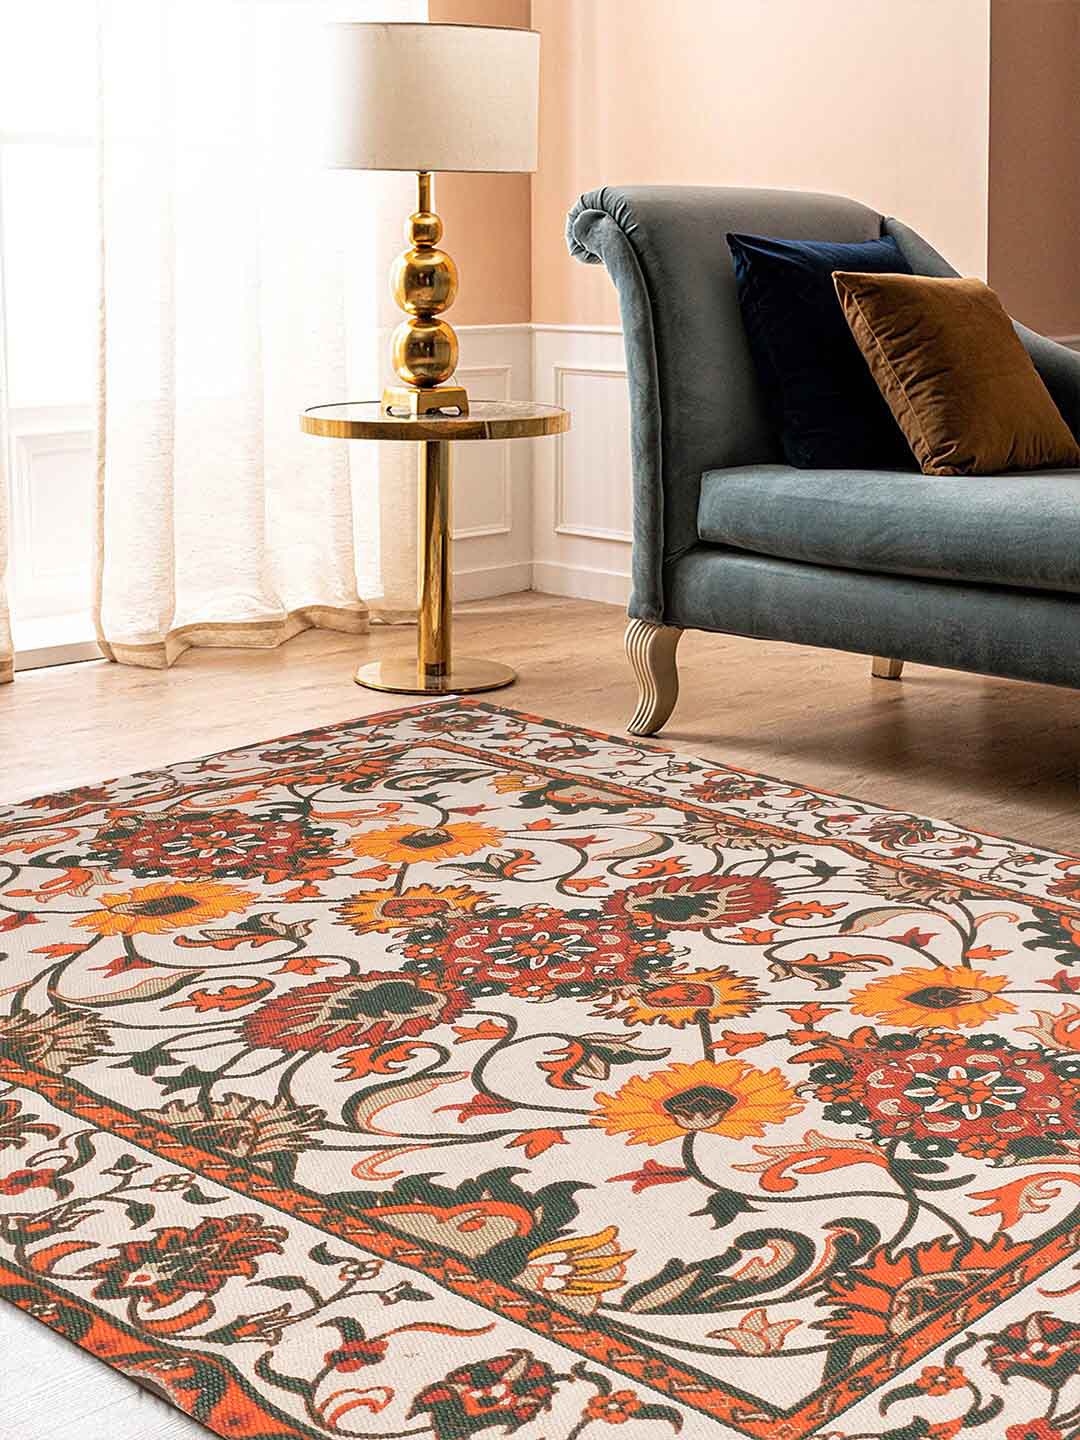 Blanc9 Jaisalmer Multicoloured Printed Cotton 4'x5.5' Carpet